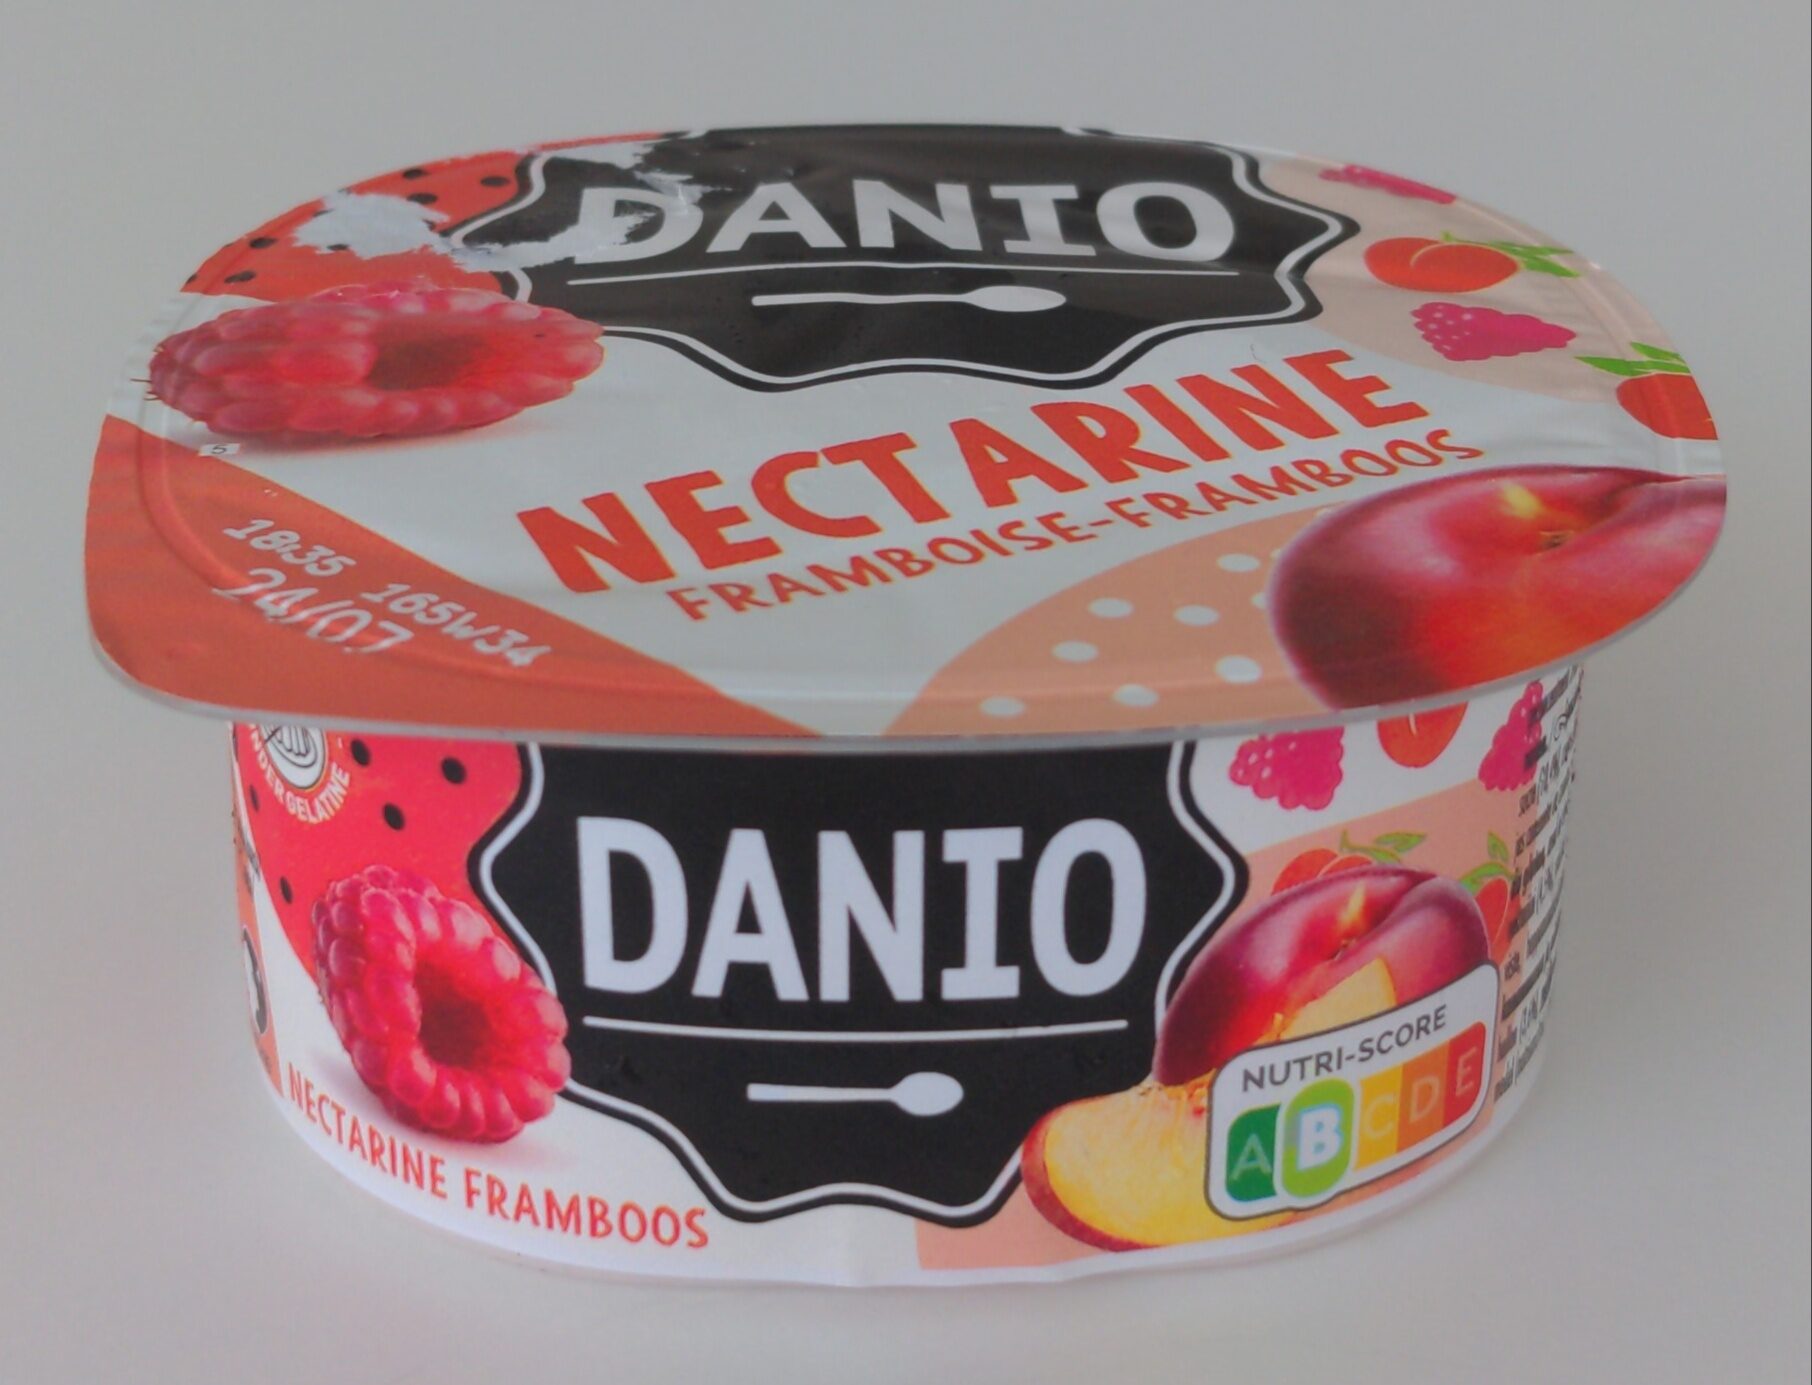 Danio nektariini-vadelma - Product - fi